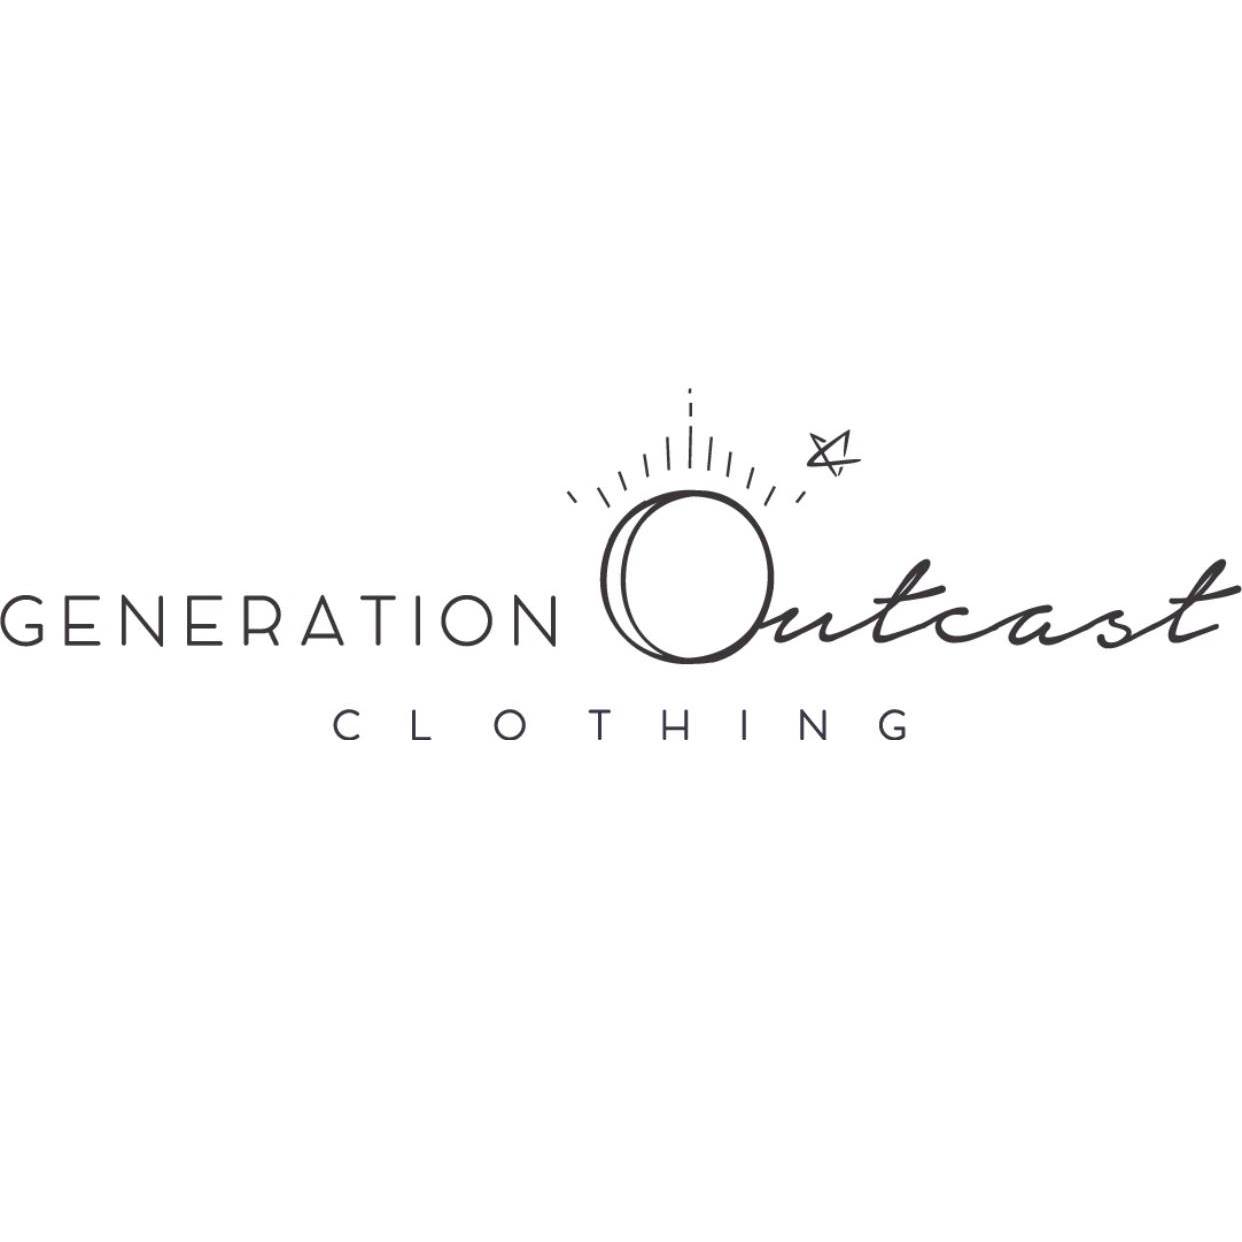 Company logo of Generation Outcast Clothing